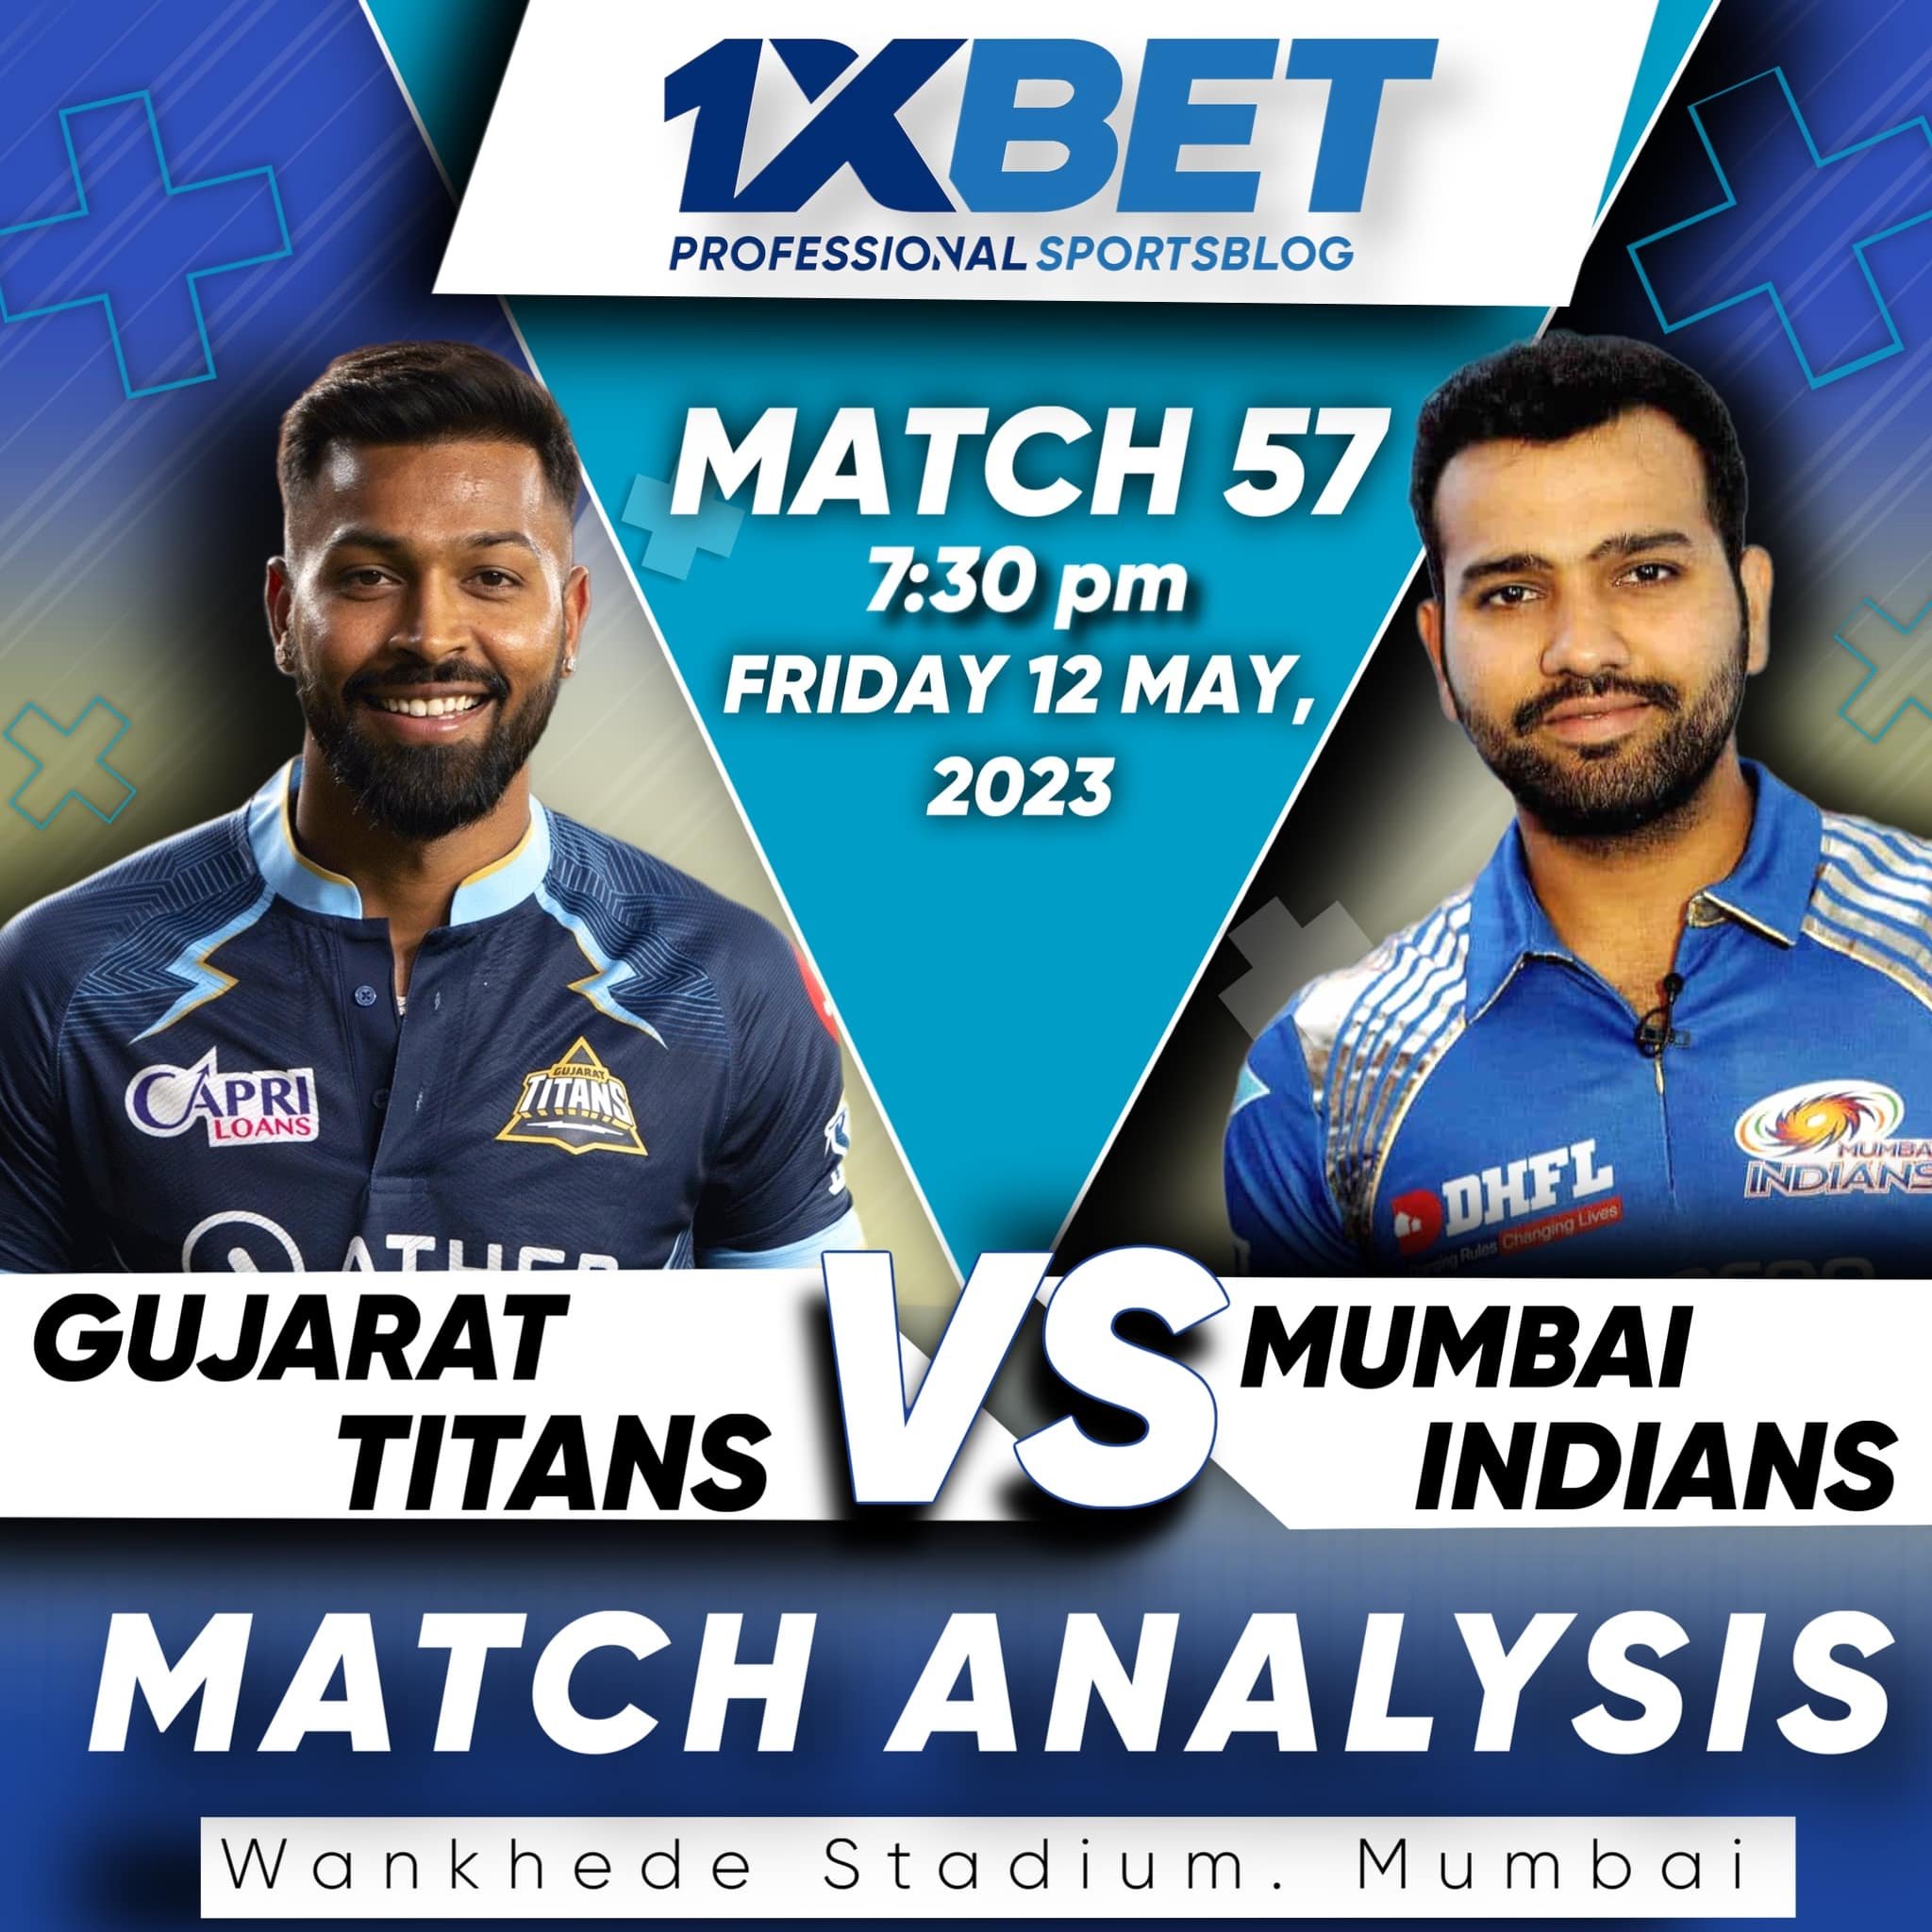 Mumbai Indians vs Gujarat Titans, IPL 2023, 57th Match Analysis